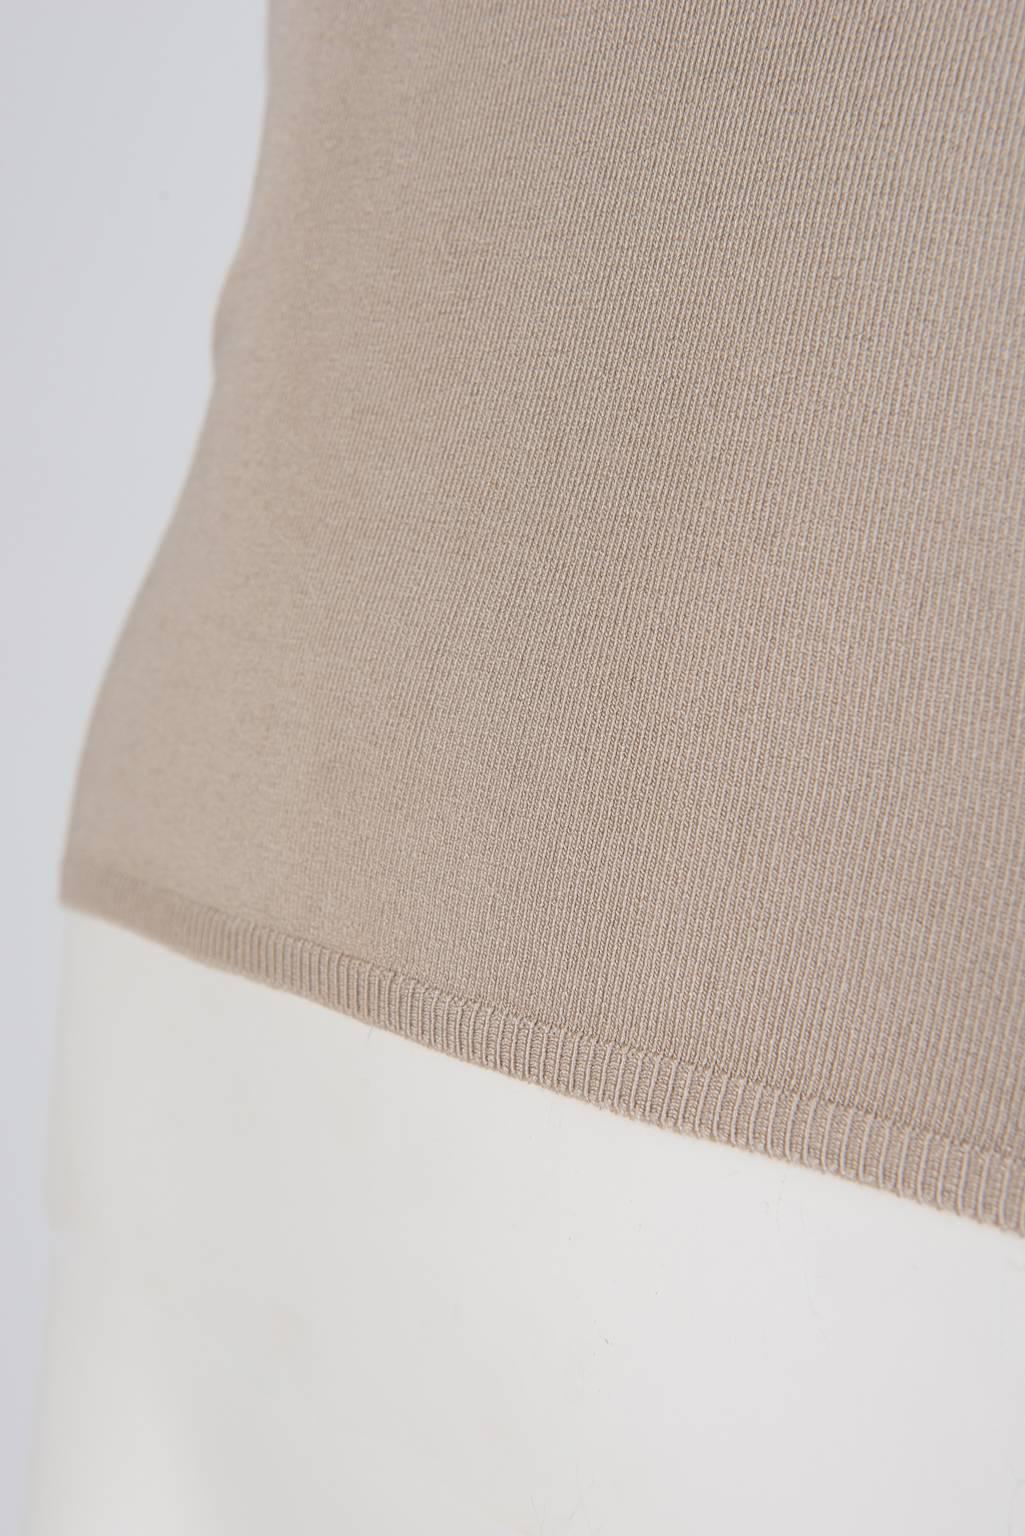 Prada Silk Knit Top For Sale 1